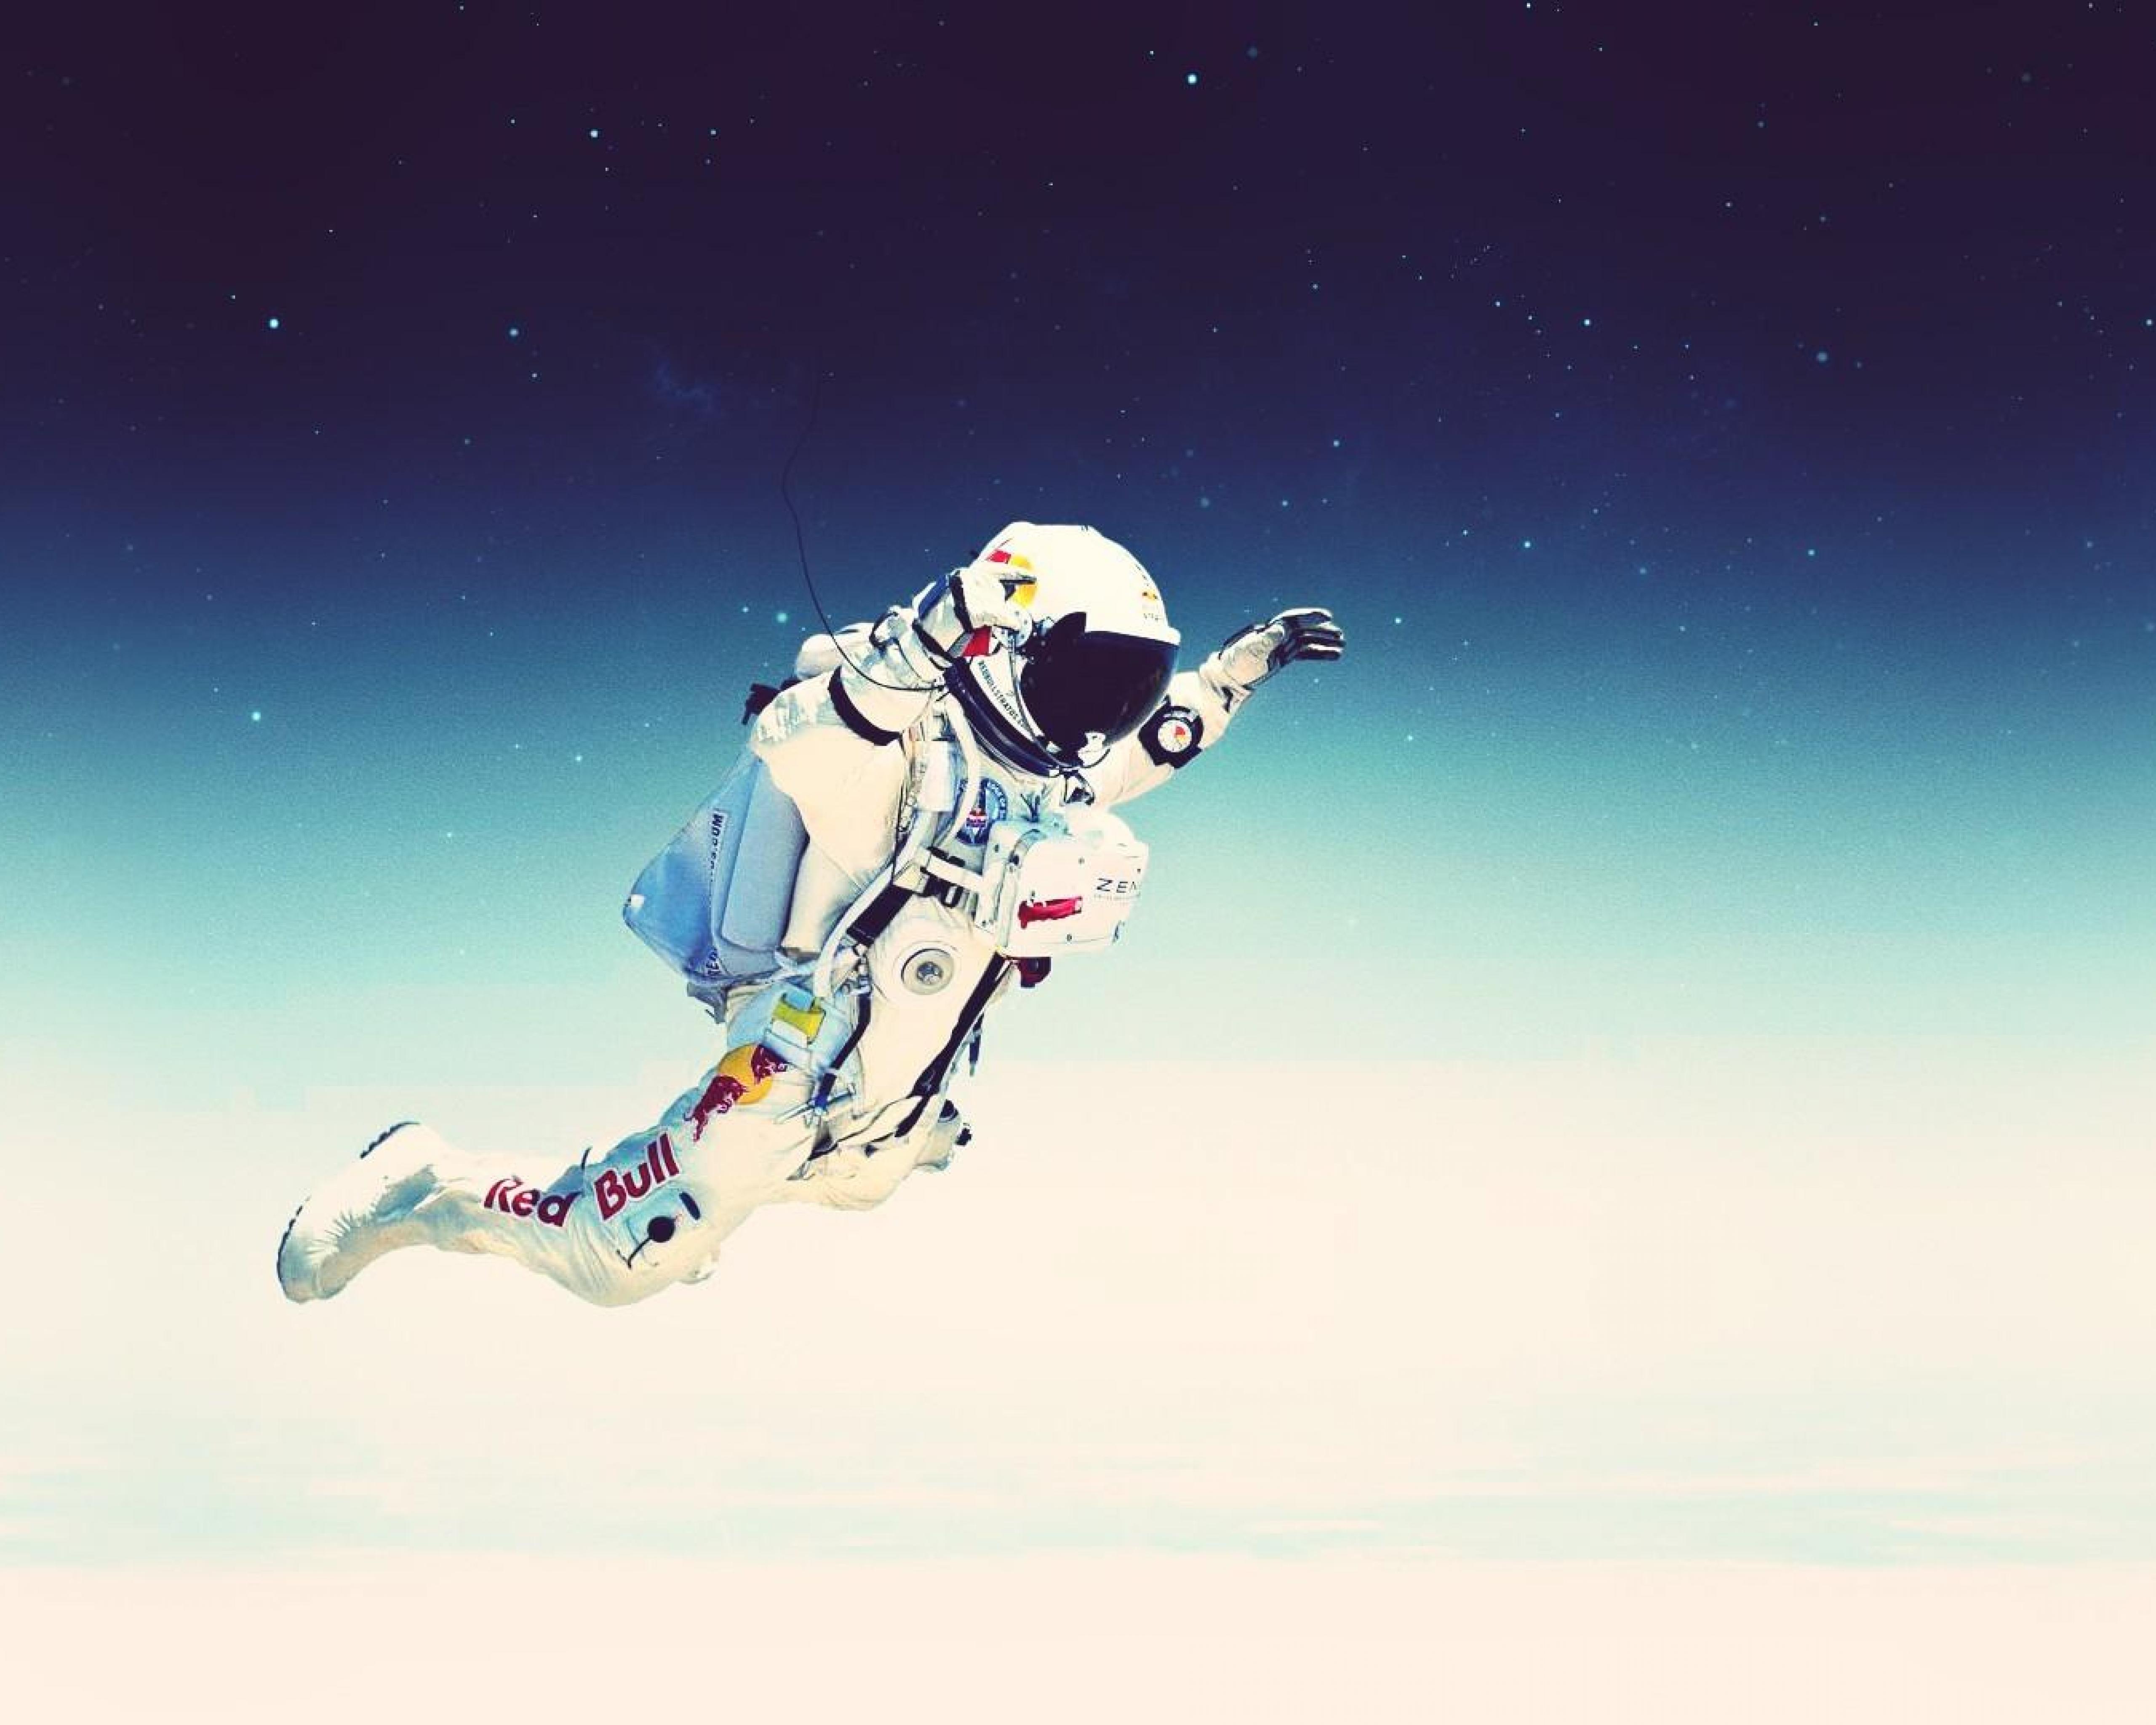 Image: Astronaut, spacesuit, stars, space, flight